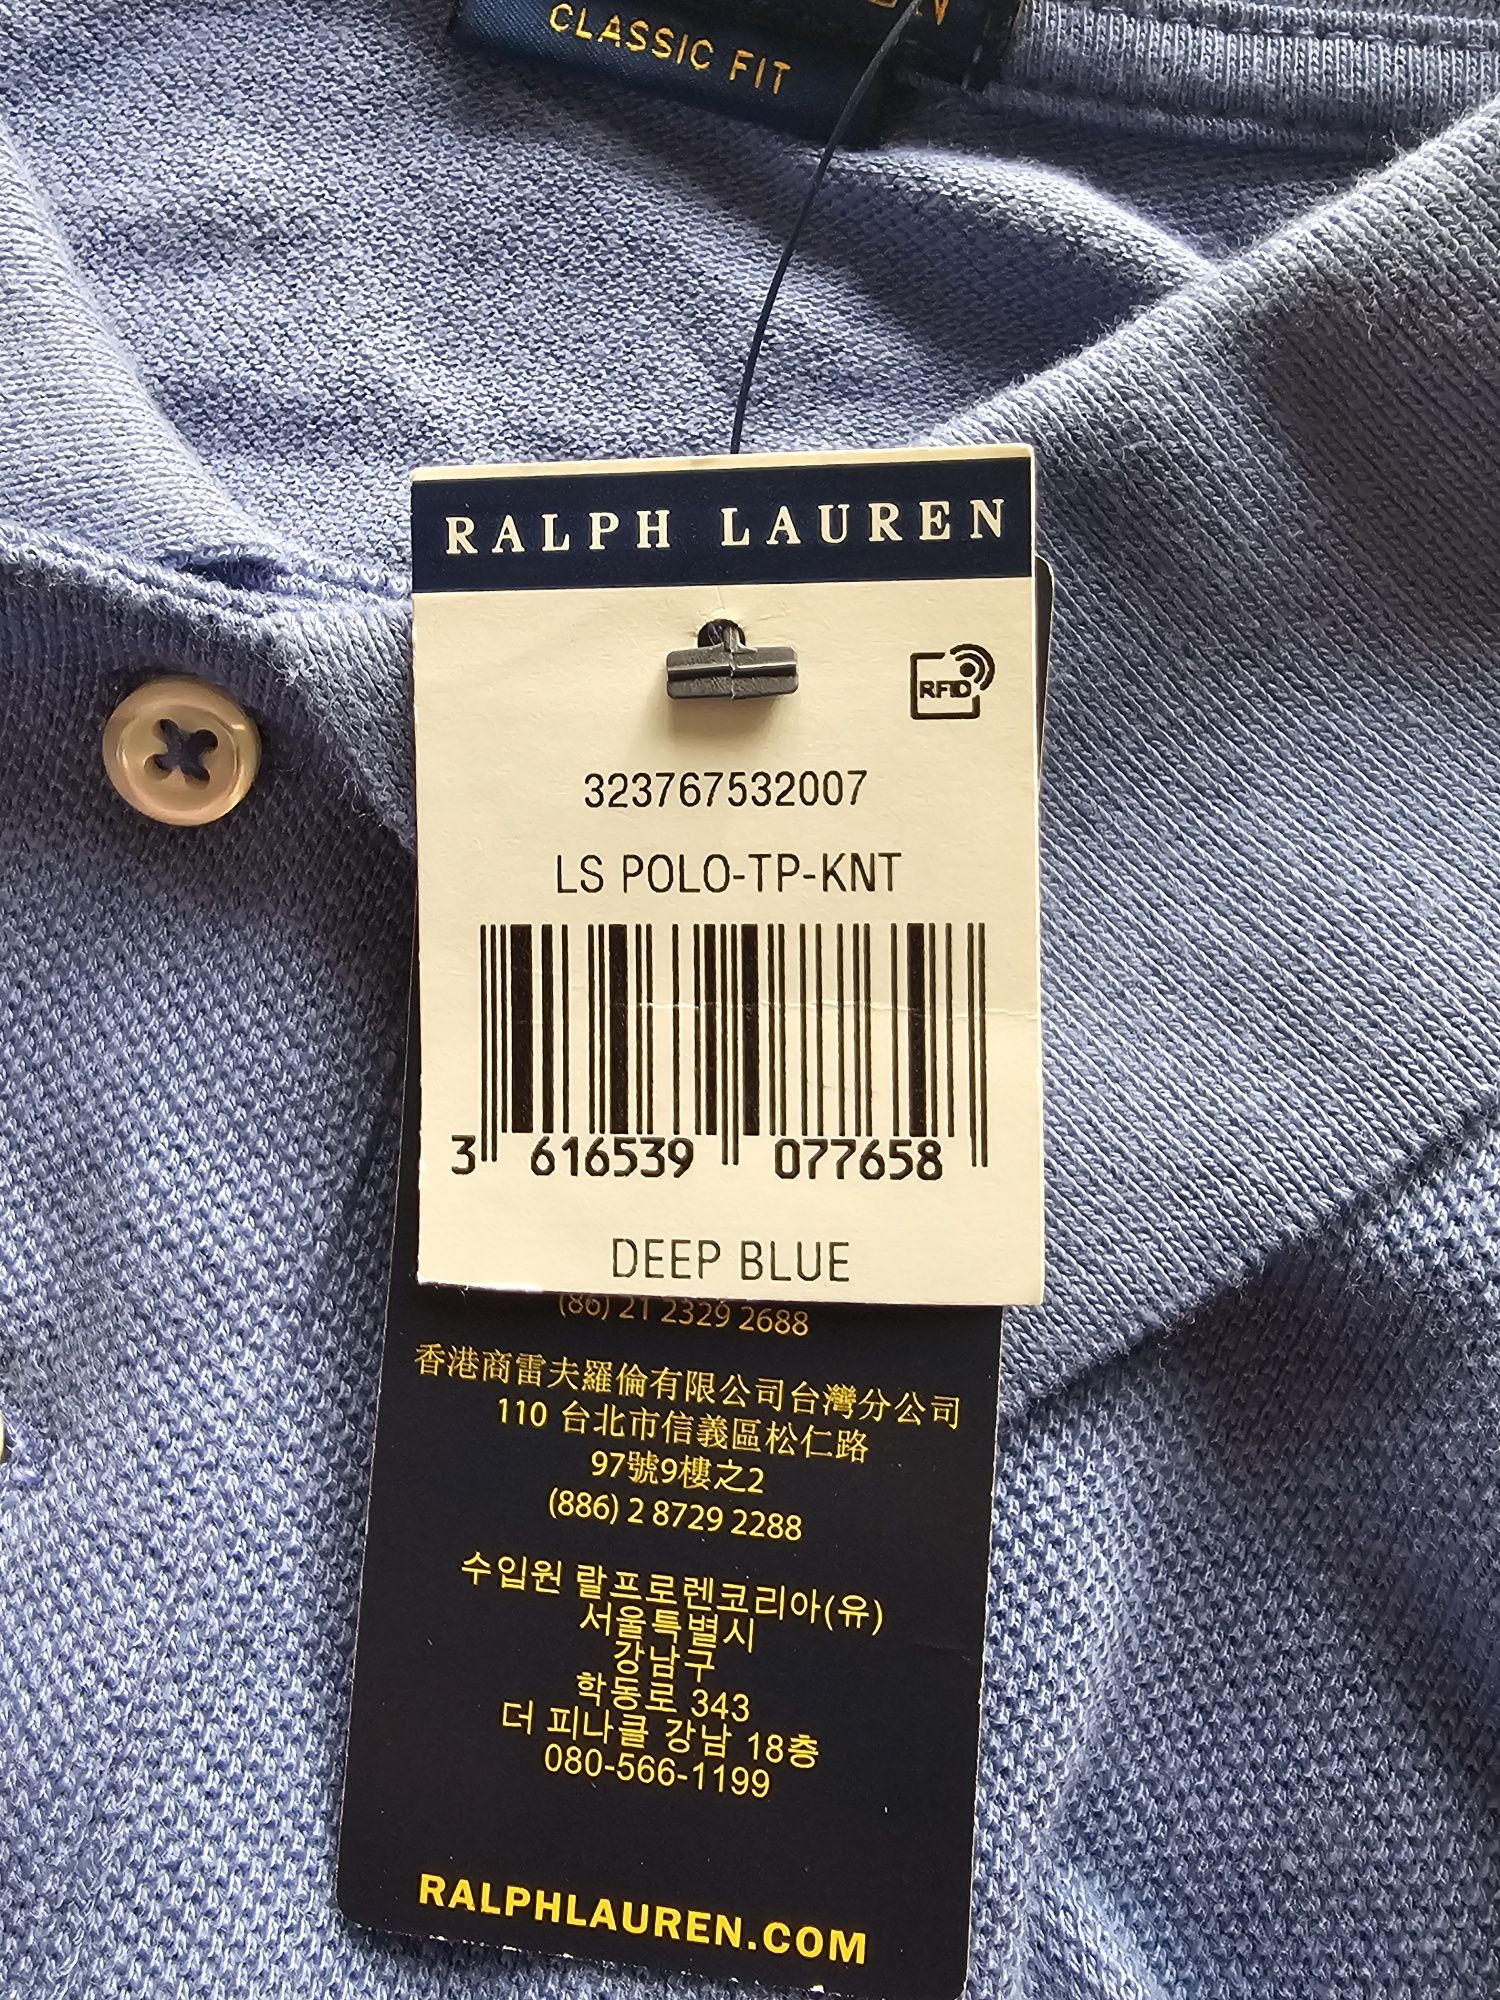 Bluza Polo Ralph Lauren / original / mărimea S clasic fit